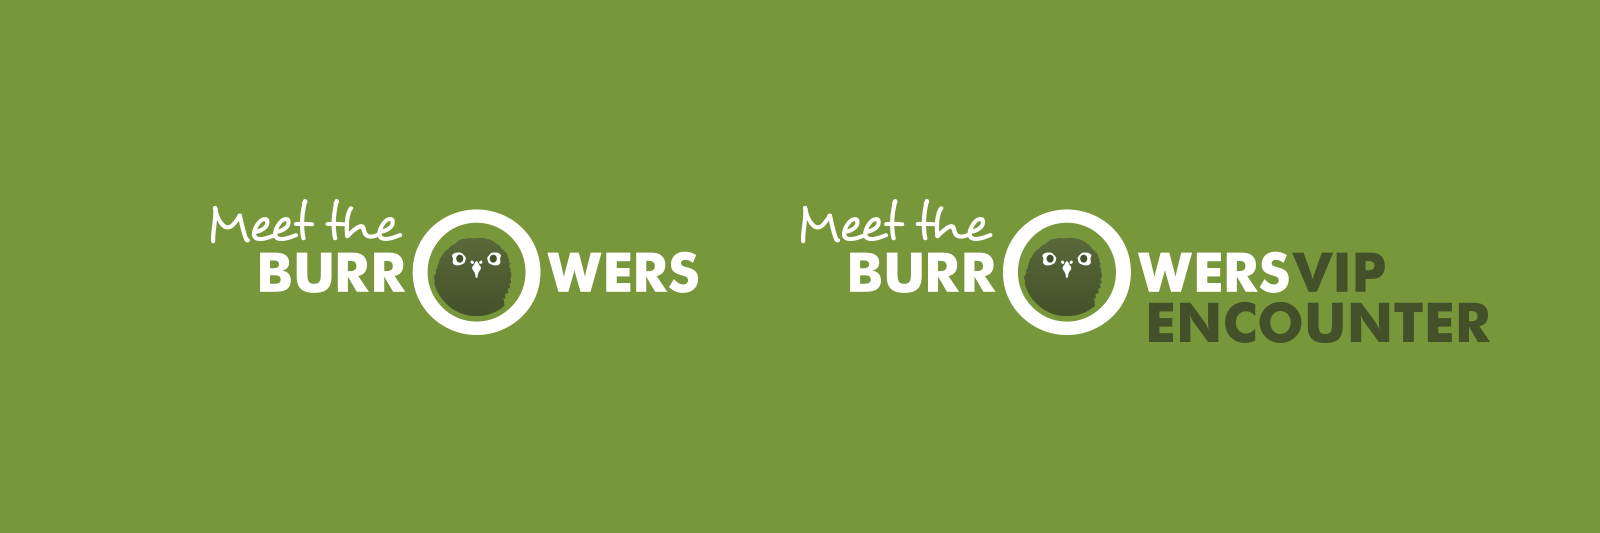 MeettheBurrowers_branding